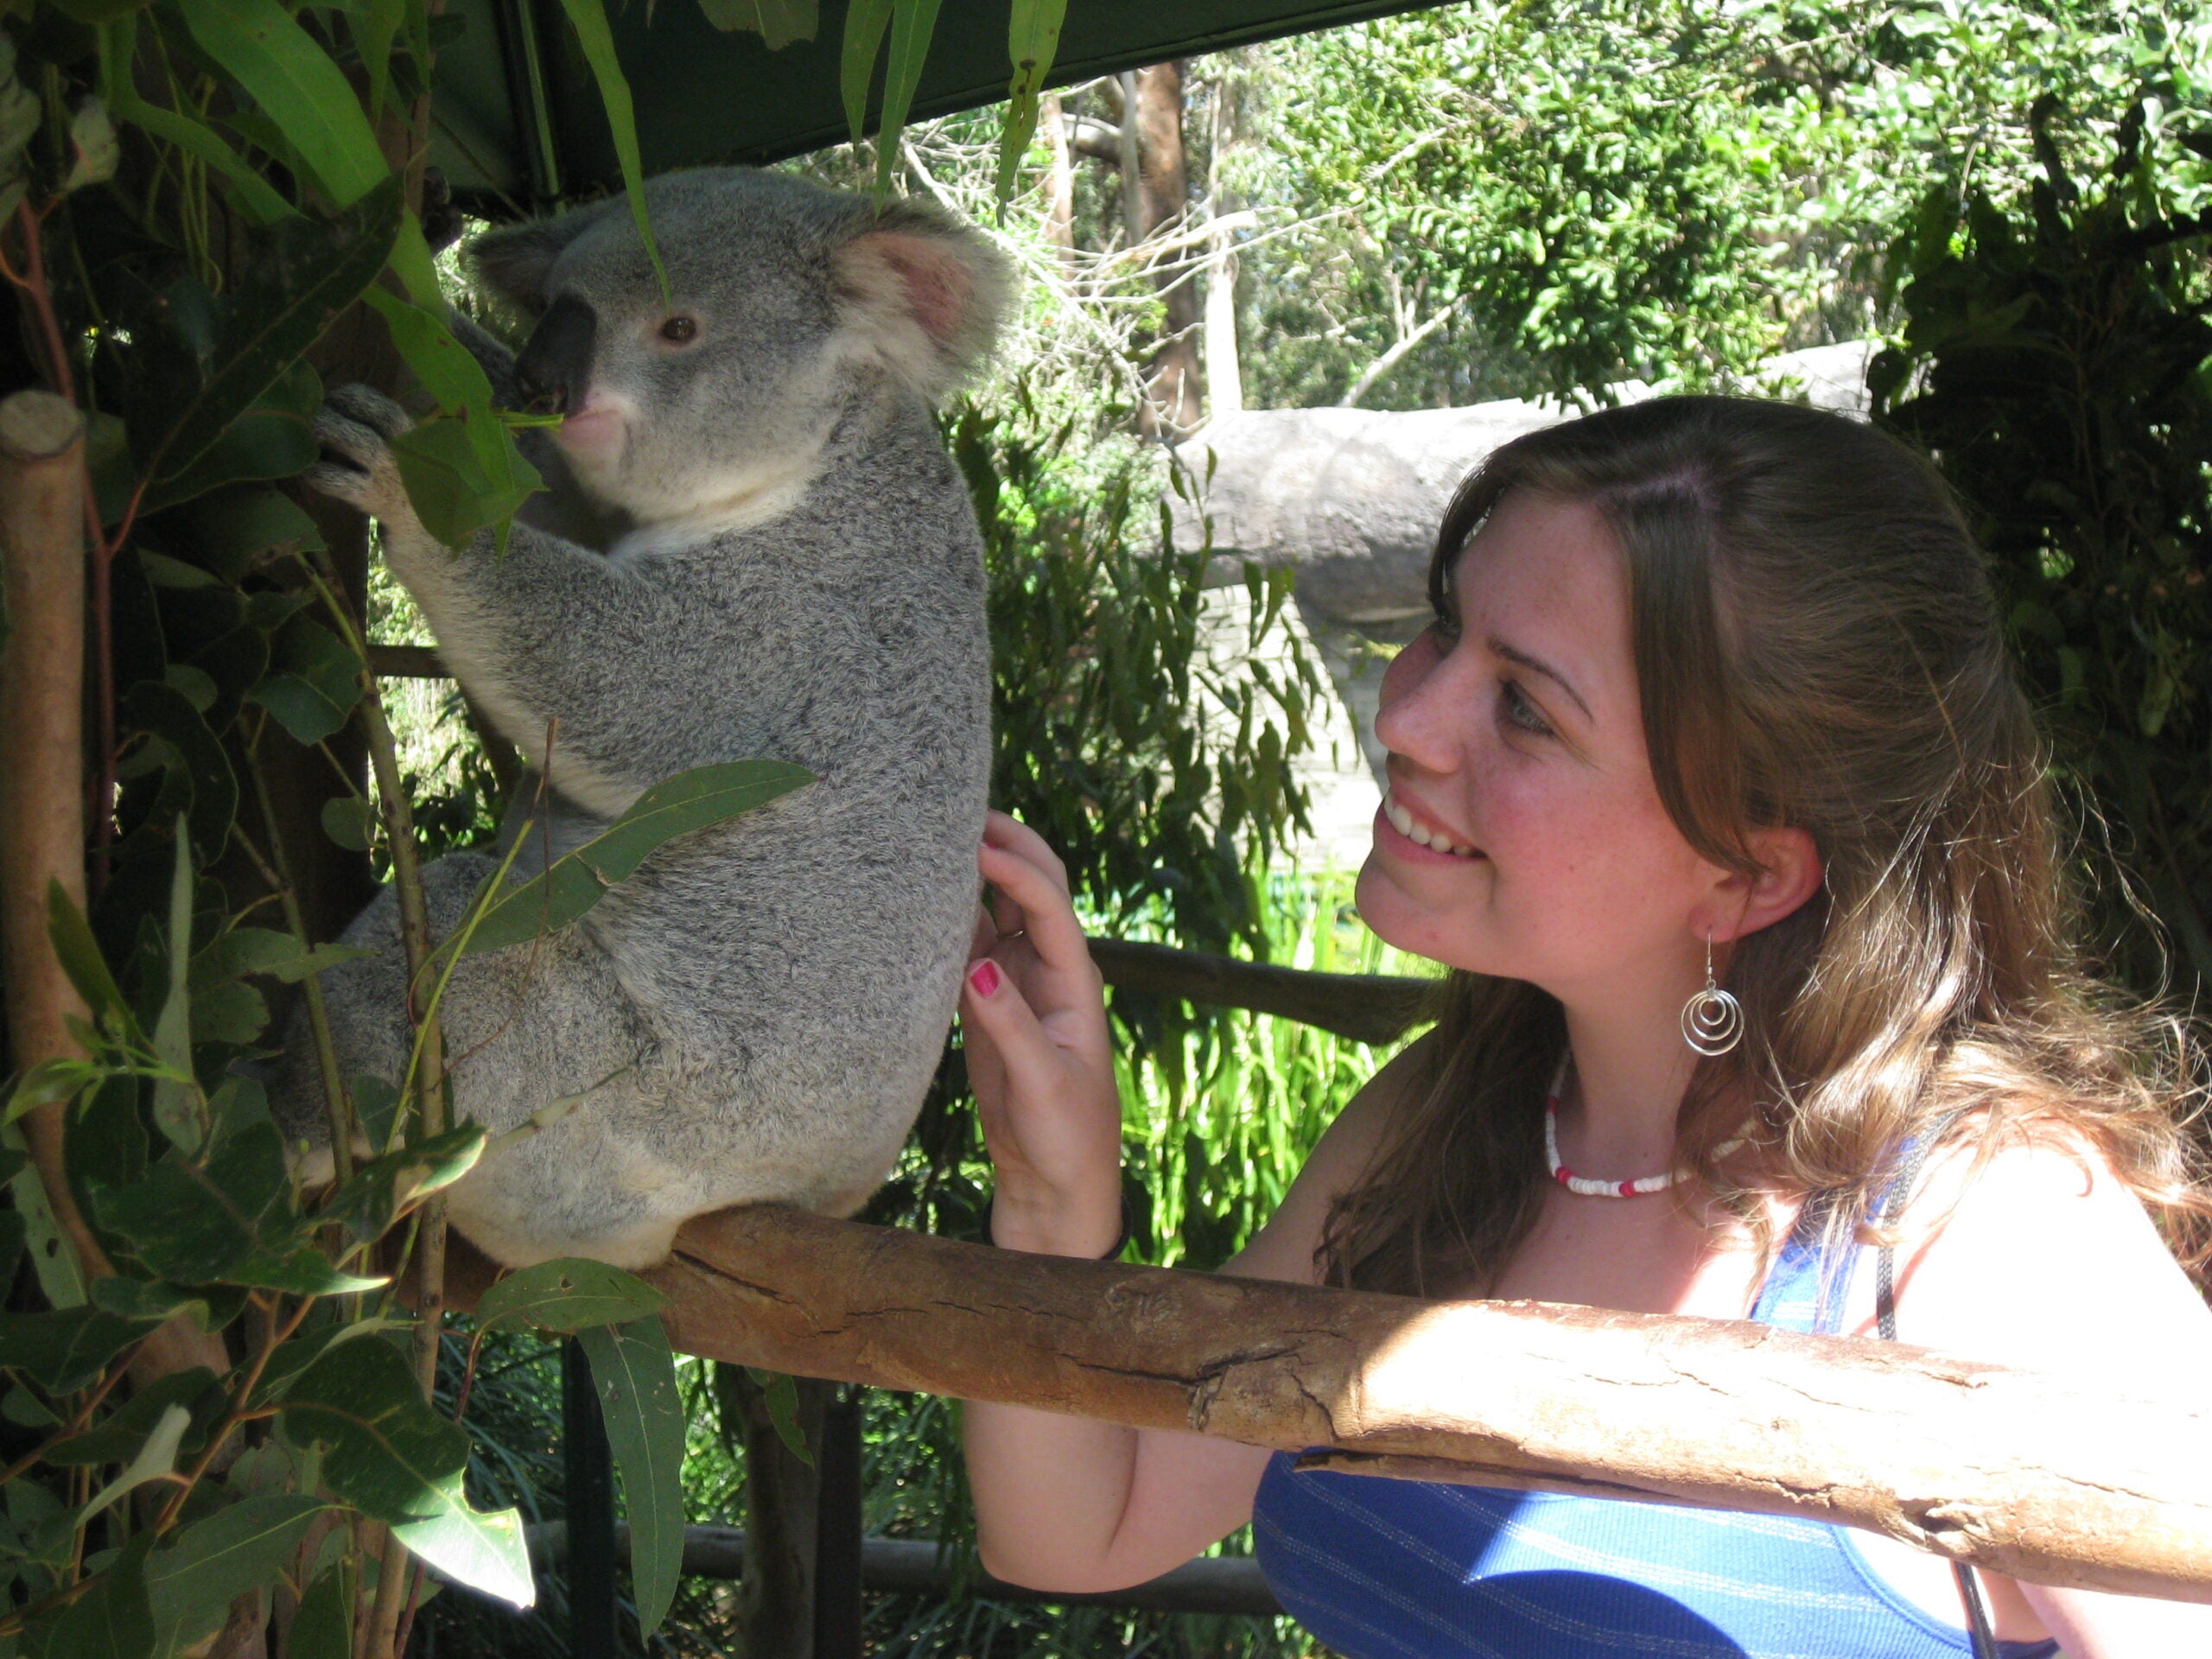 LVC student poses with koala bear in Australia